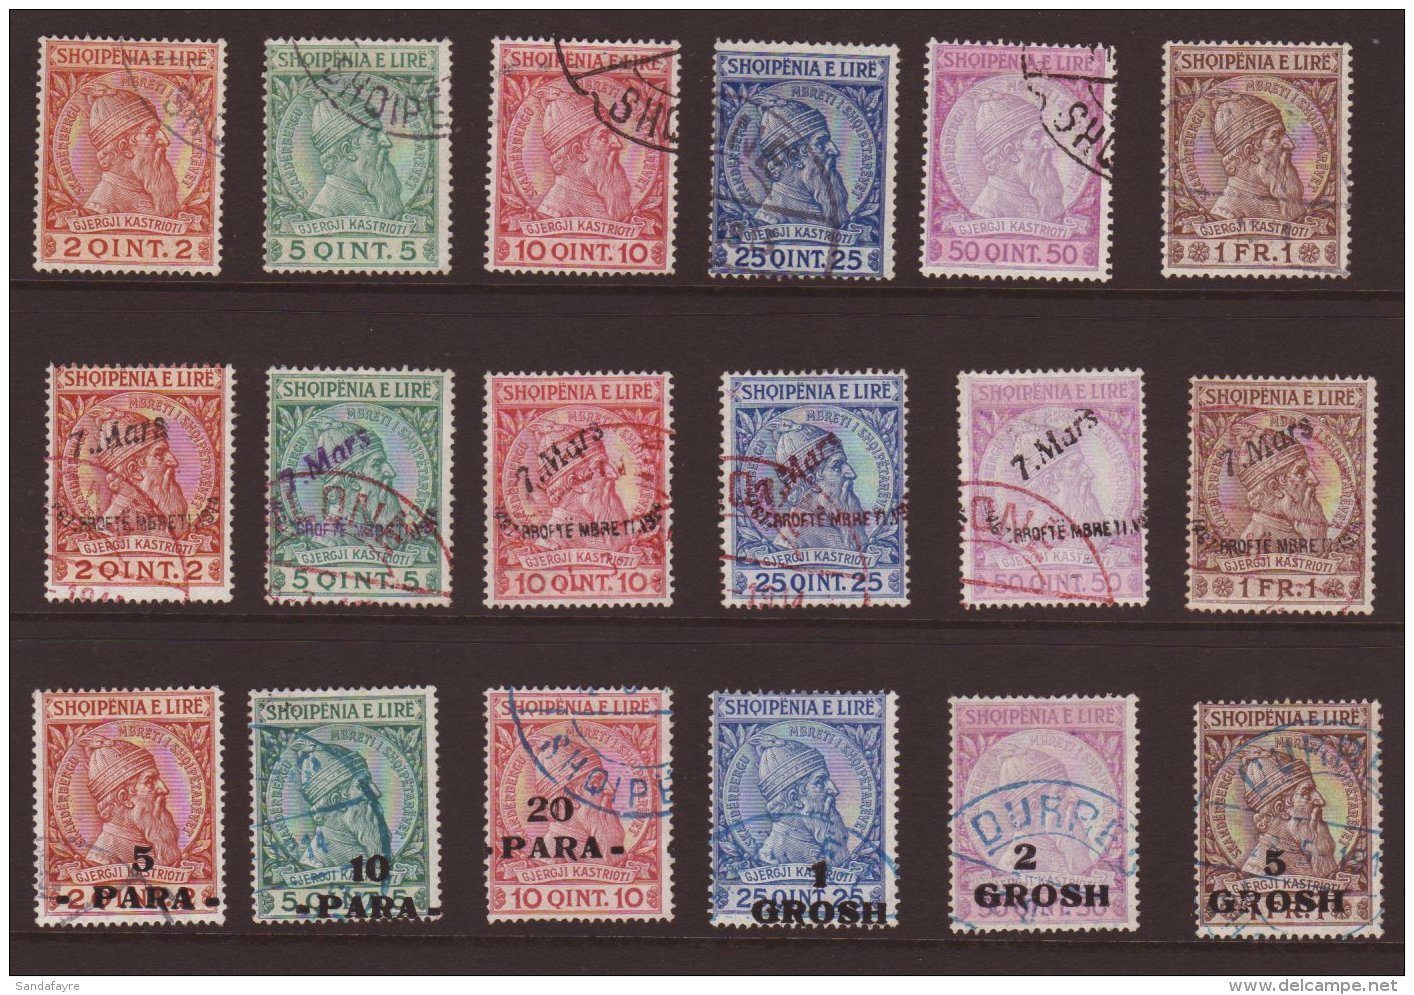 1913 - 1914 SKANDERBEG ISSUES Fine Used Selection Comprising 1913 Set, 1914 "7 Mars" Ovpt Set, 1914 Surcharge Set,... - Albanien